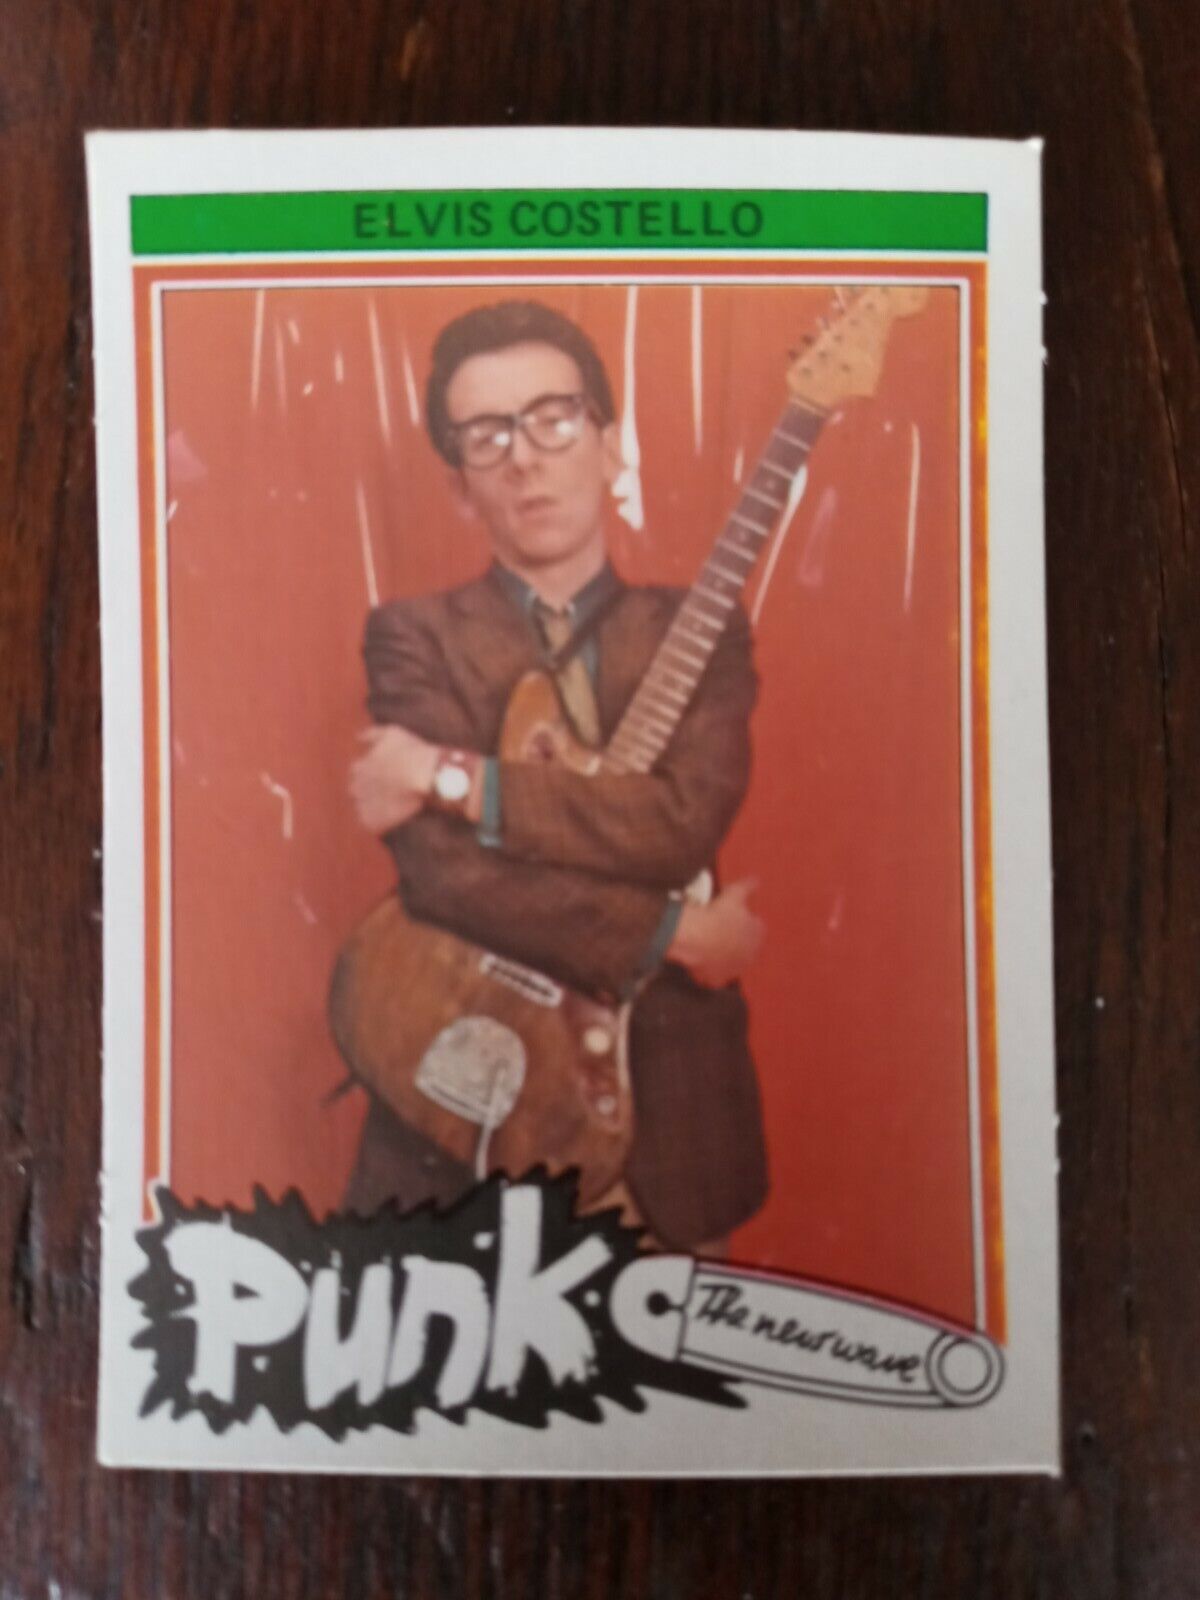 ELVIS COSTELLO ROOKIE CARD Gum Card 1977 Monty punk 70s RARE pic 2